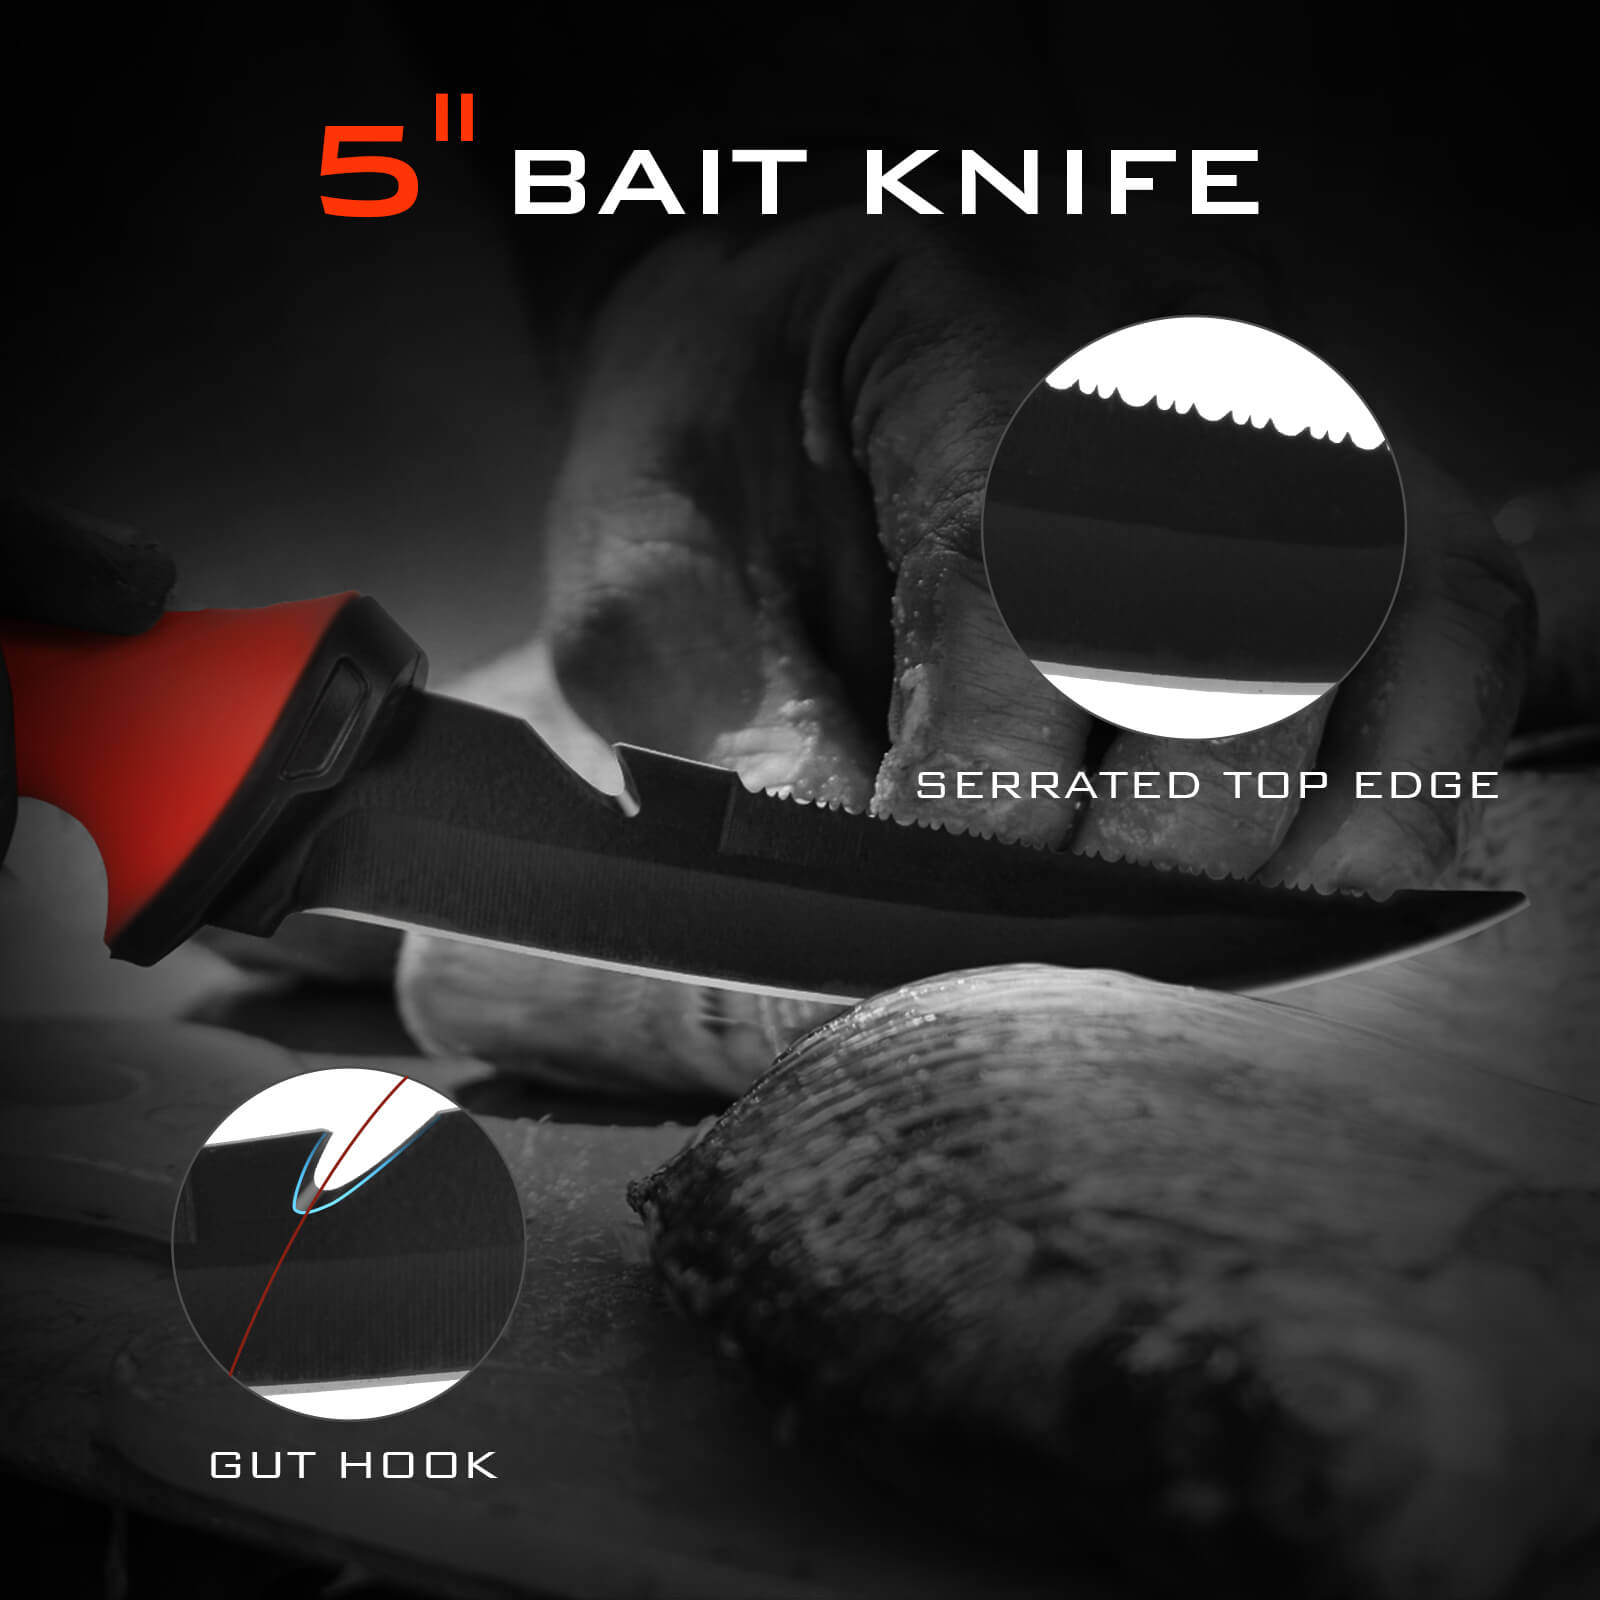 KastKing Intimidator Filet Knife set